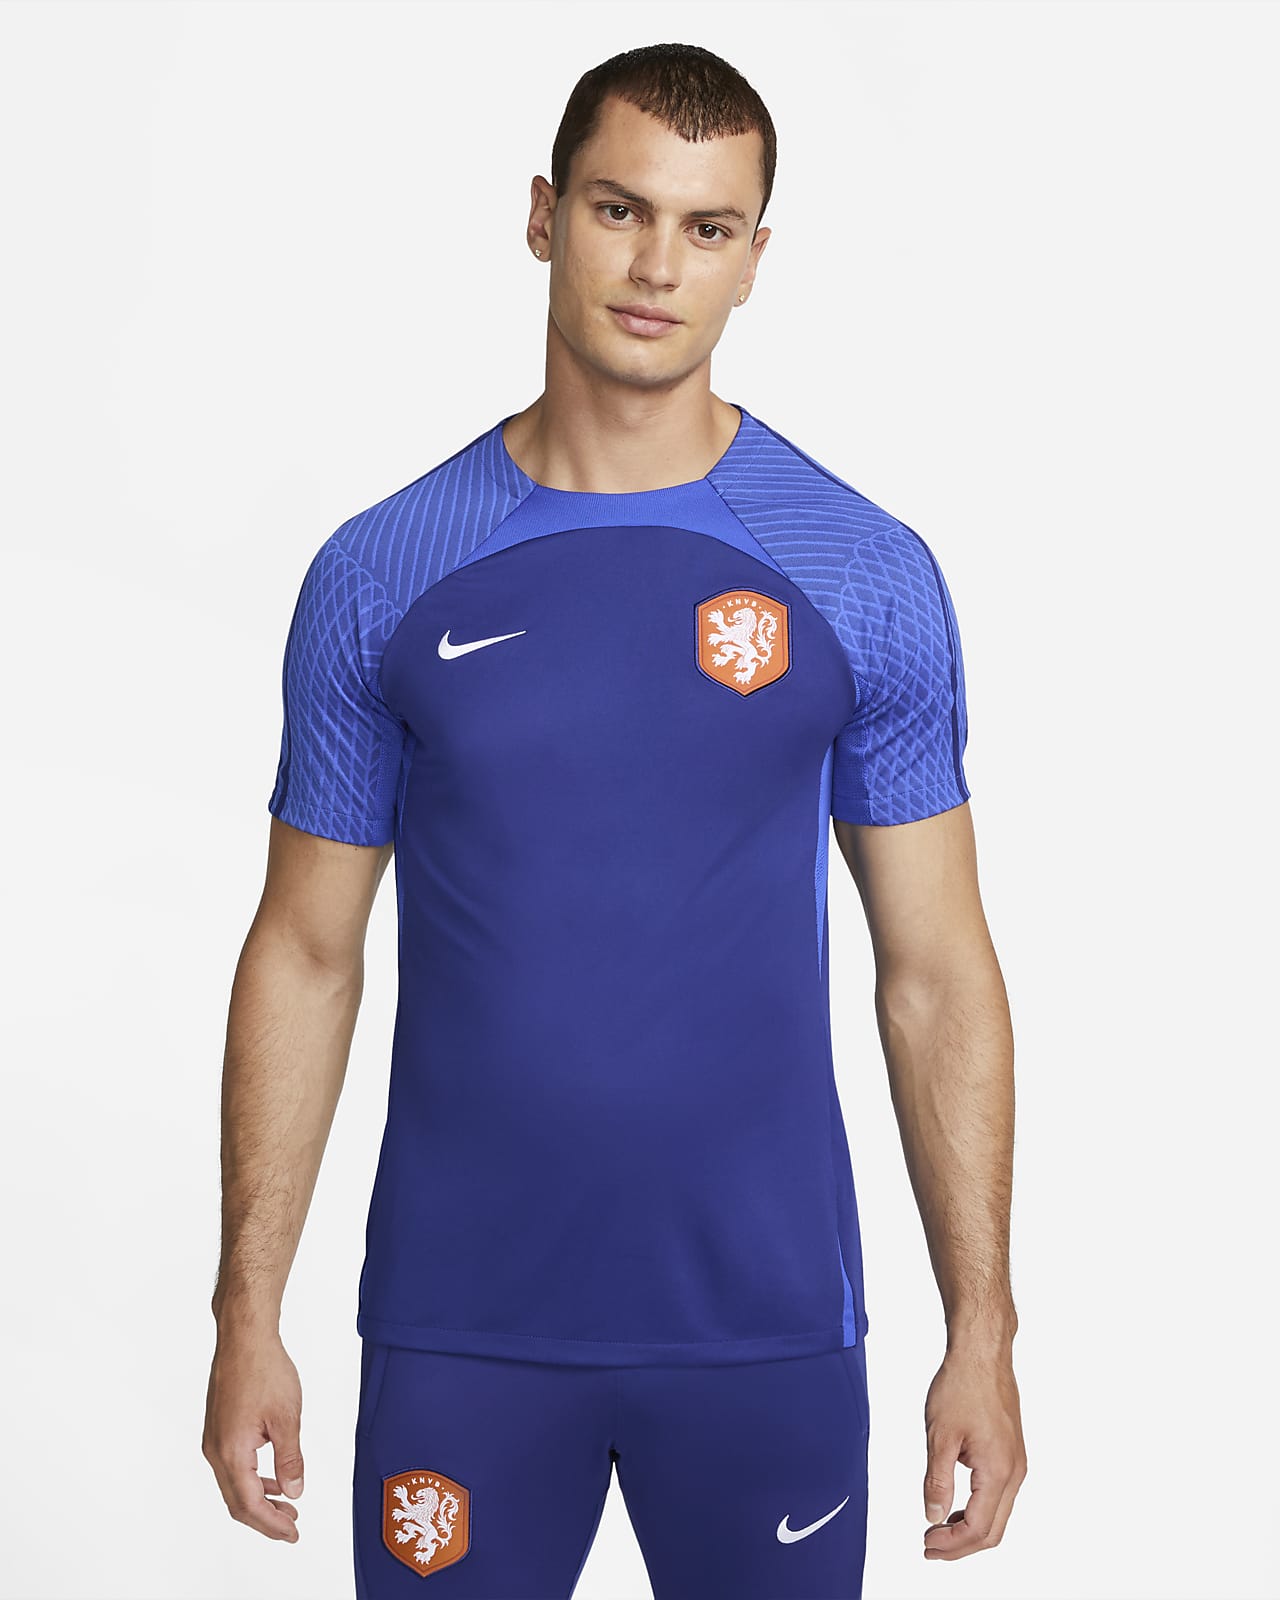 Netherlands KNVB Soccer Fifa World Cup Football Futbol Adult Mens Cotton T  Shirt